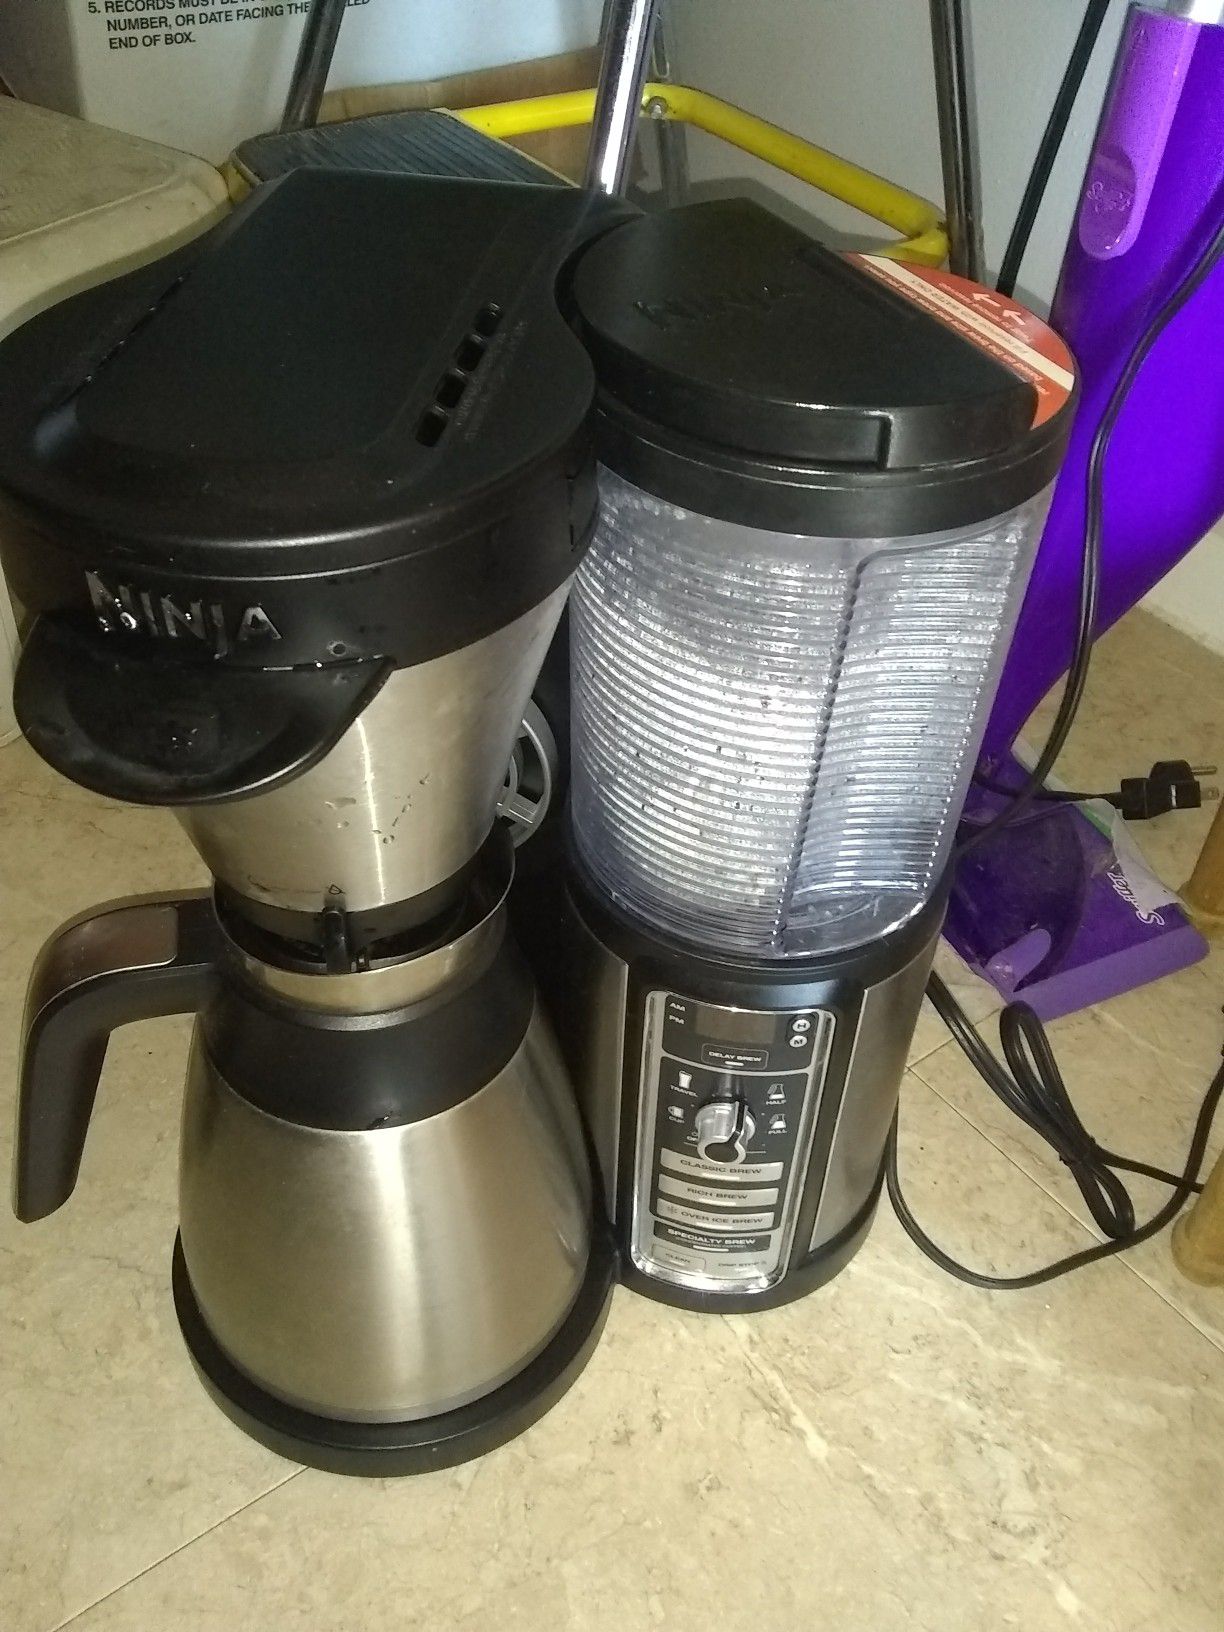 Ninja coffee maker